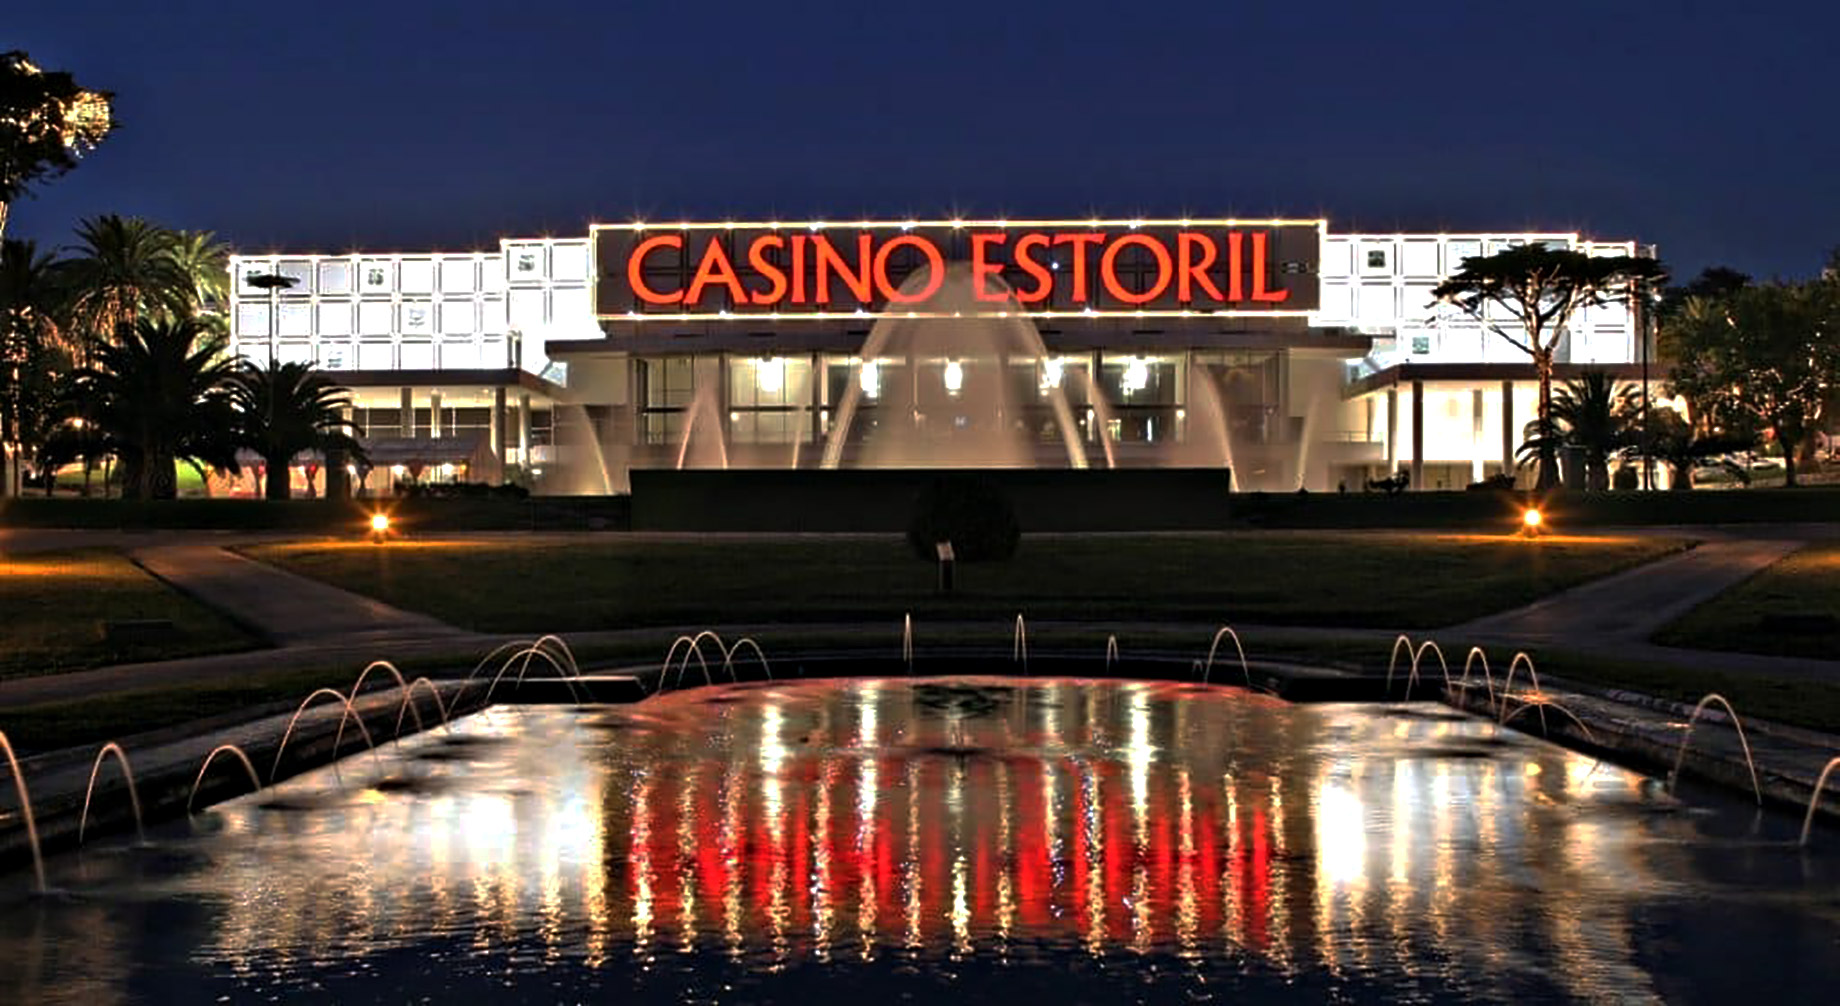 Casino Estoril – Portugal